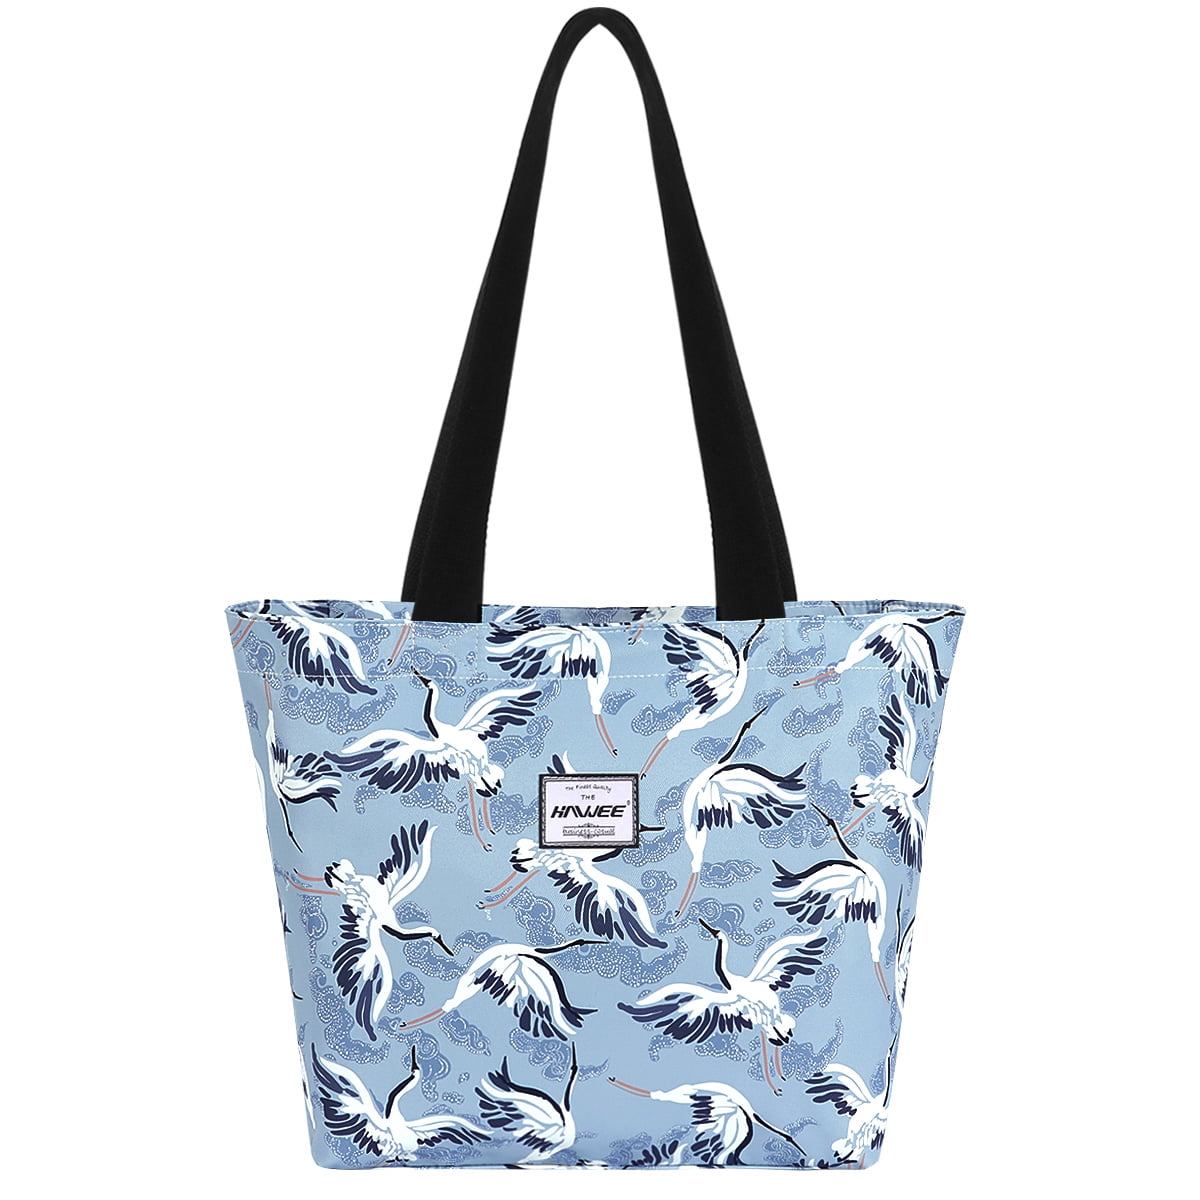 Flower Women Mesh Totes Bags Transparent Shopping Girls Travel Handbags #LY 